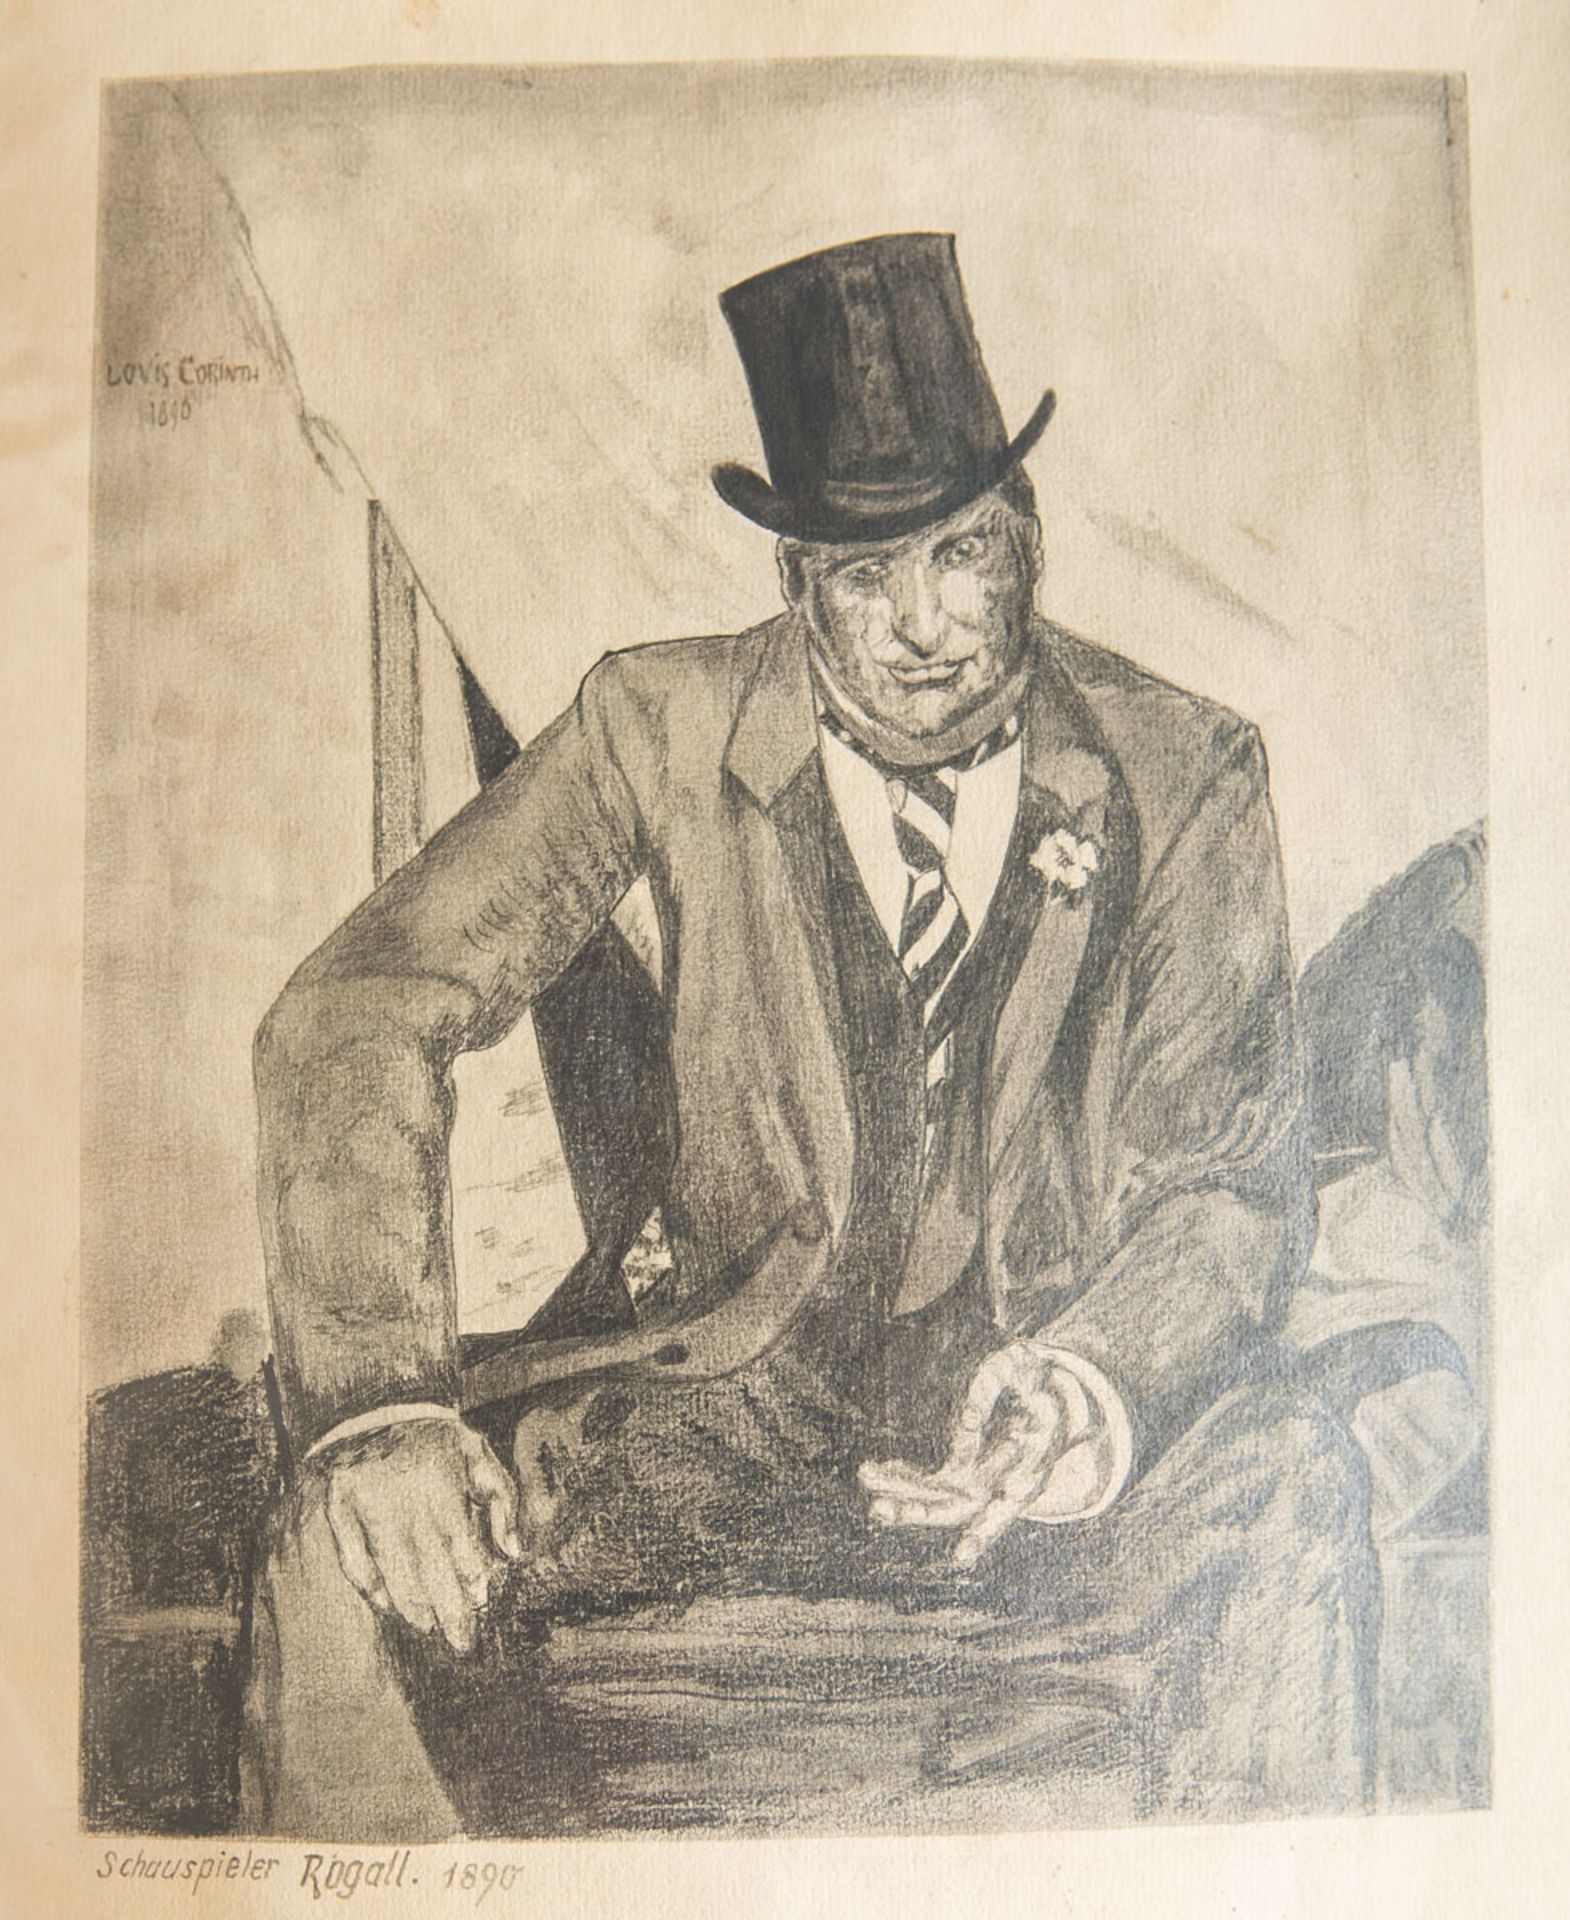 Corinth, Lovis (1858 - 1925), "Schauspieler Rogall" (1890)